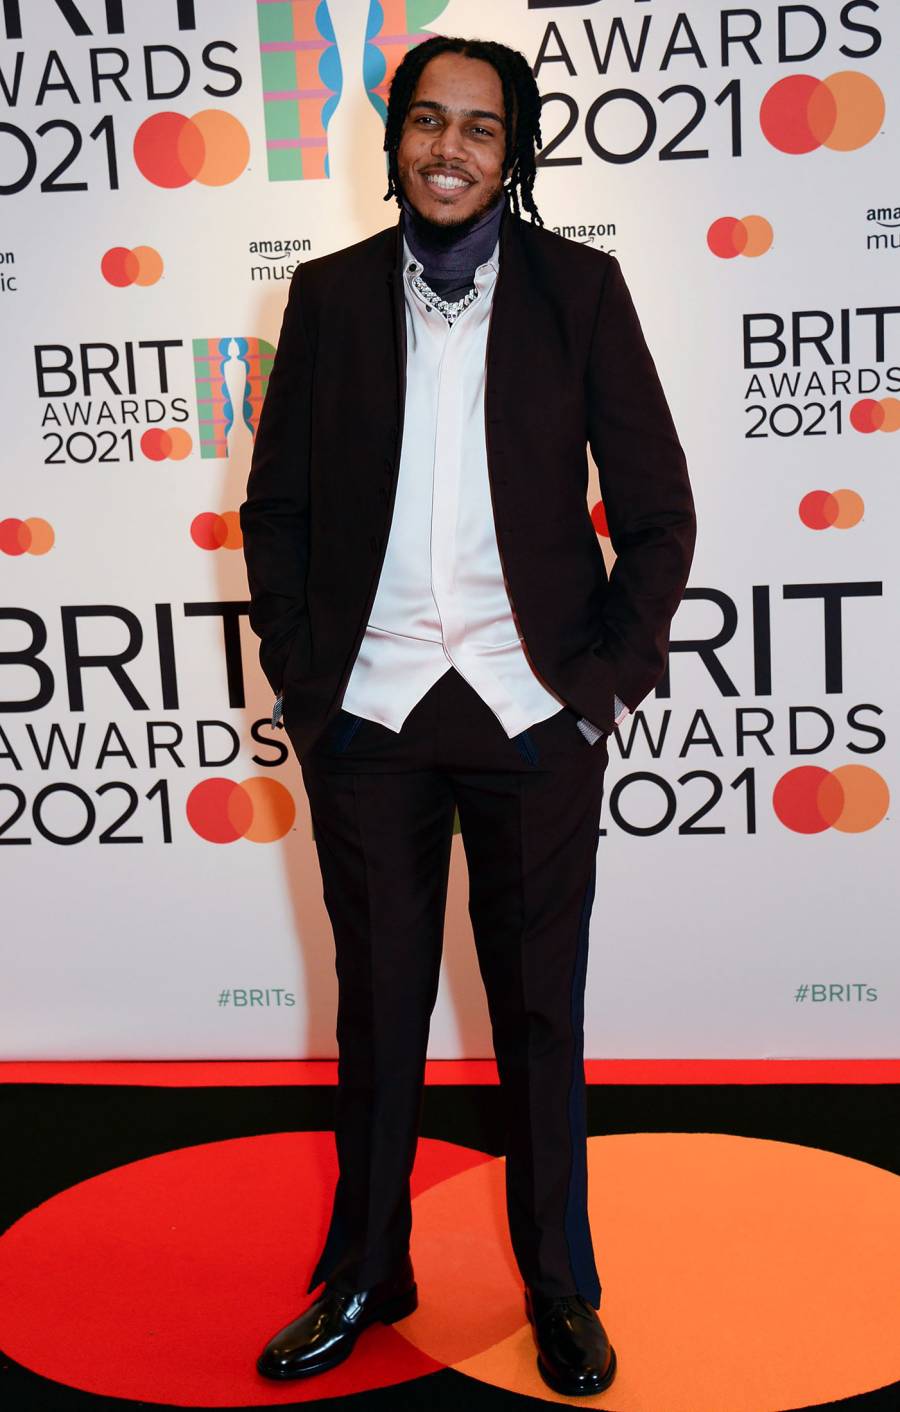 2021 BRIT Awards Red Carpet Arrivals - AJ Tracey